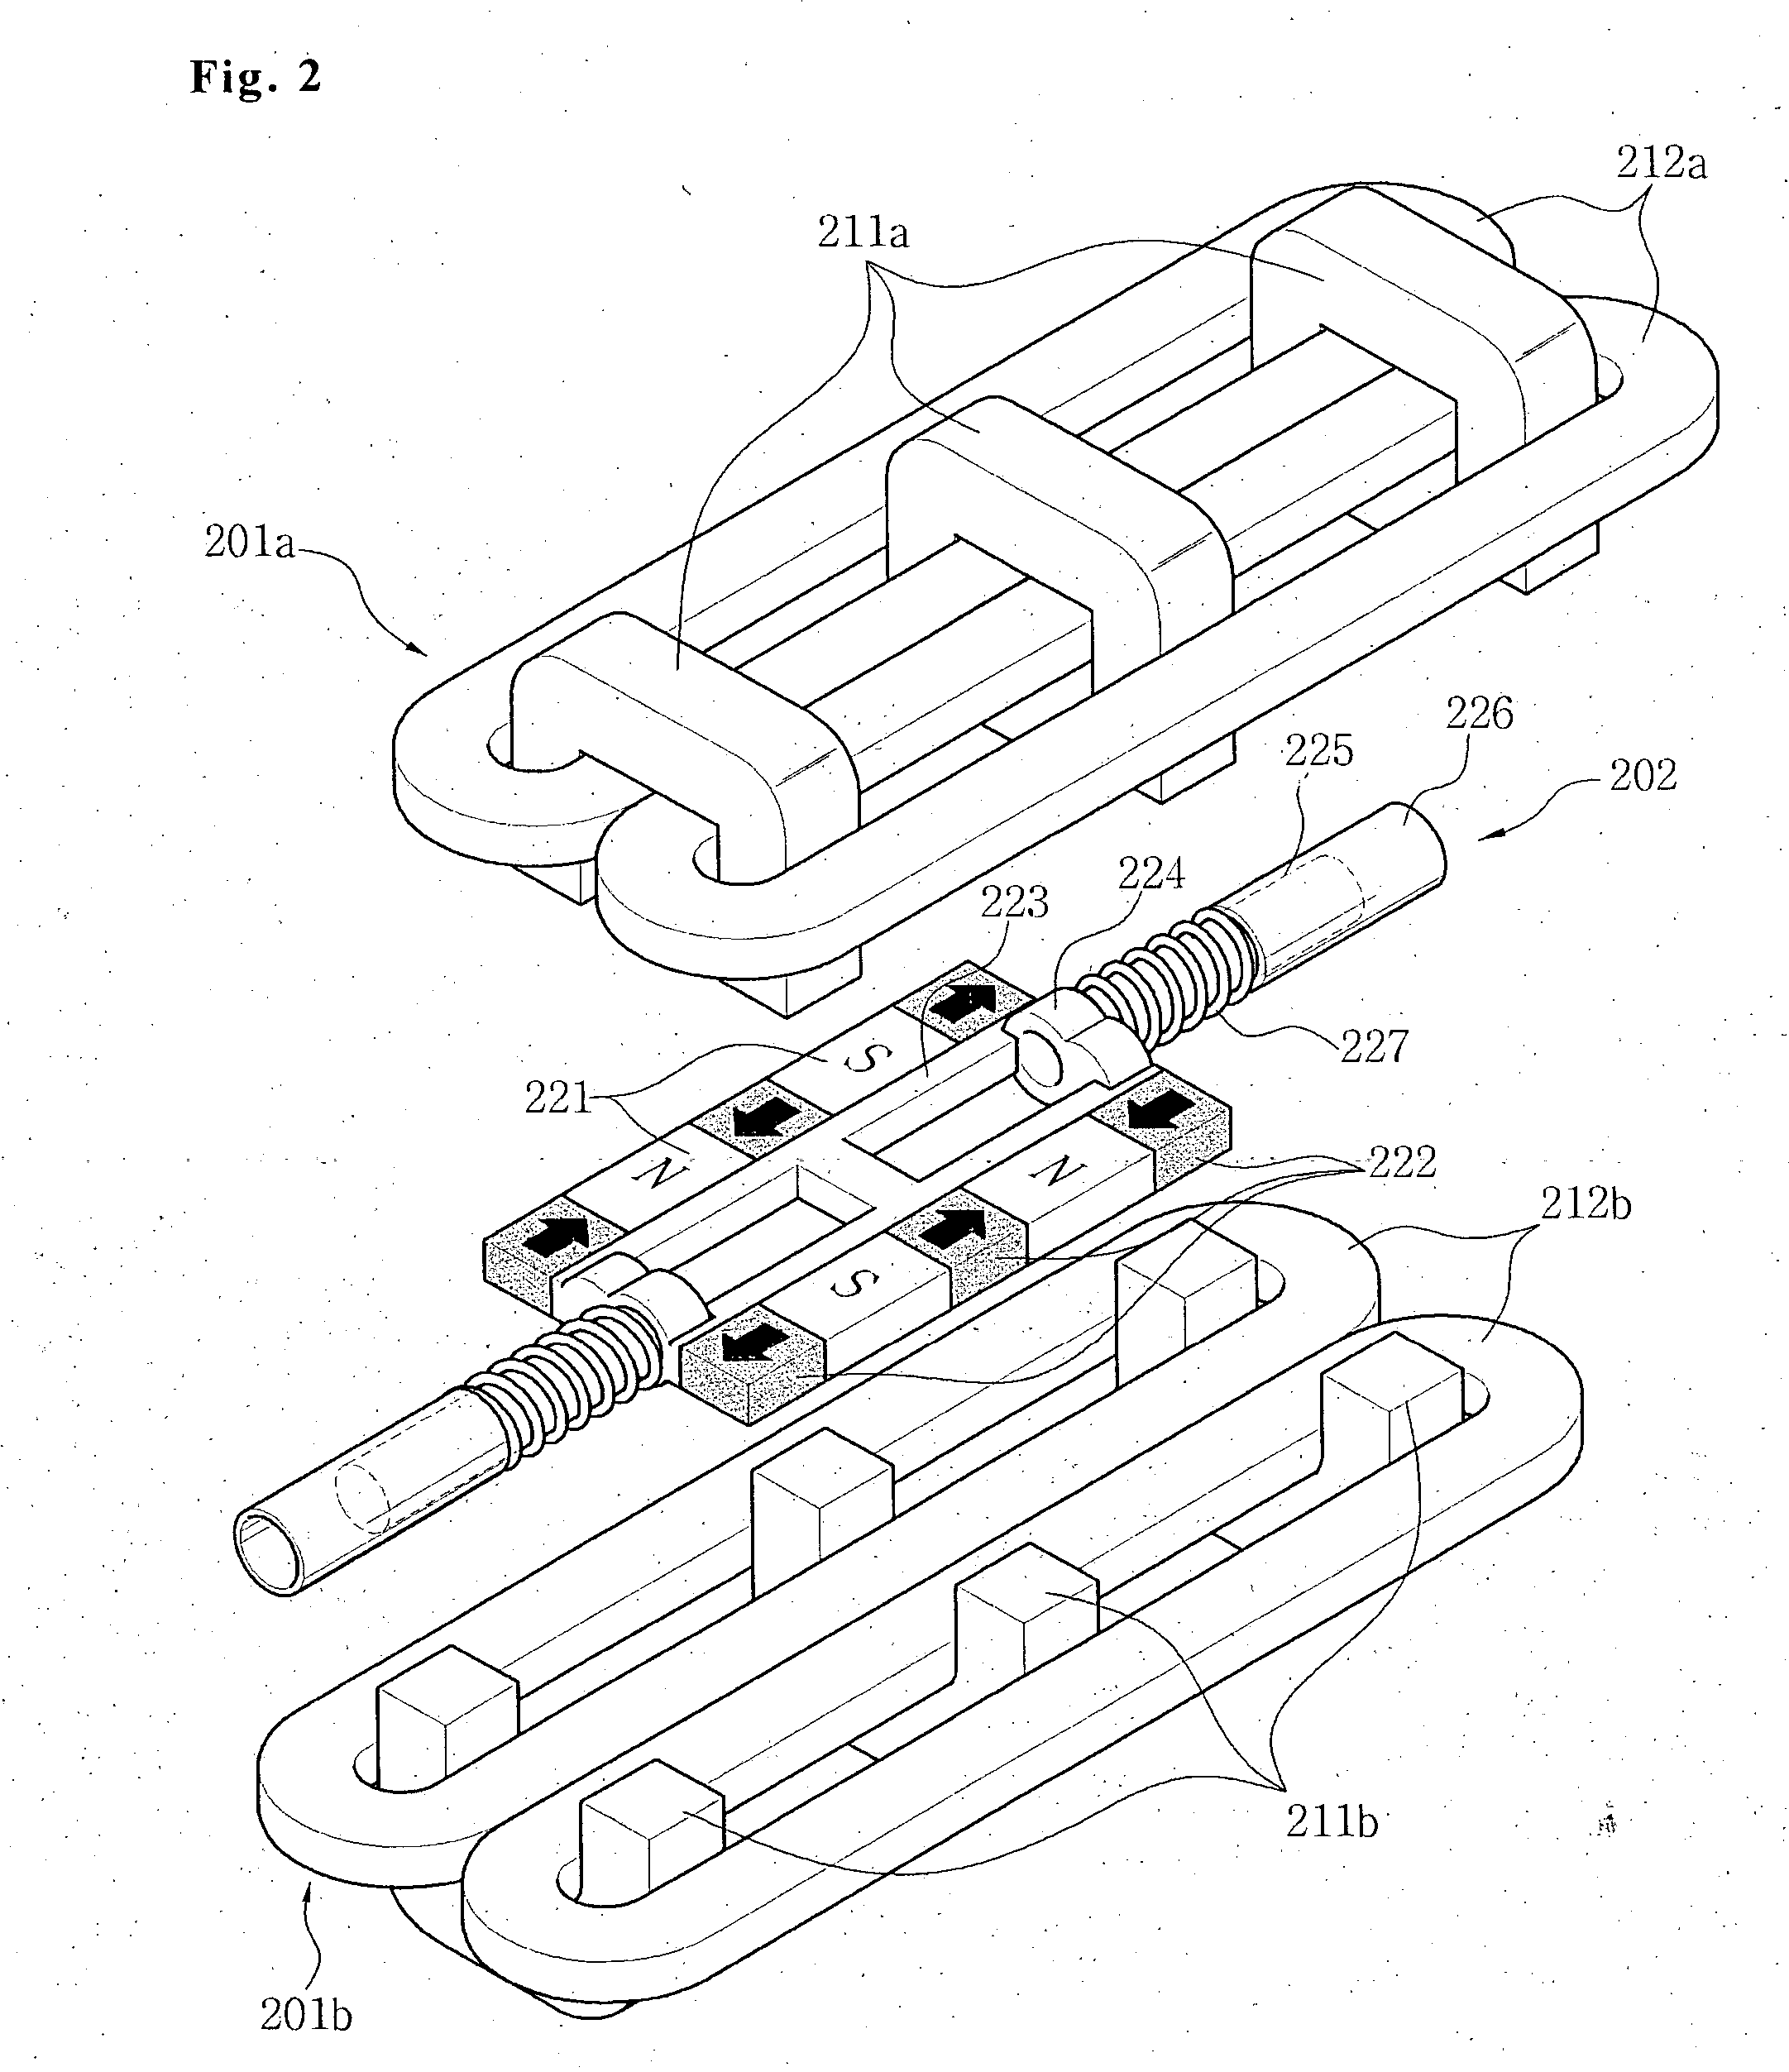 Bi-directional operating compressor using transverse flux linear motor